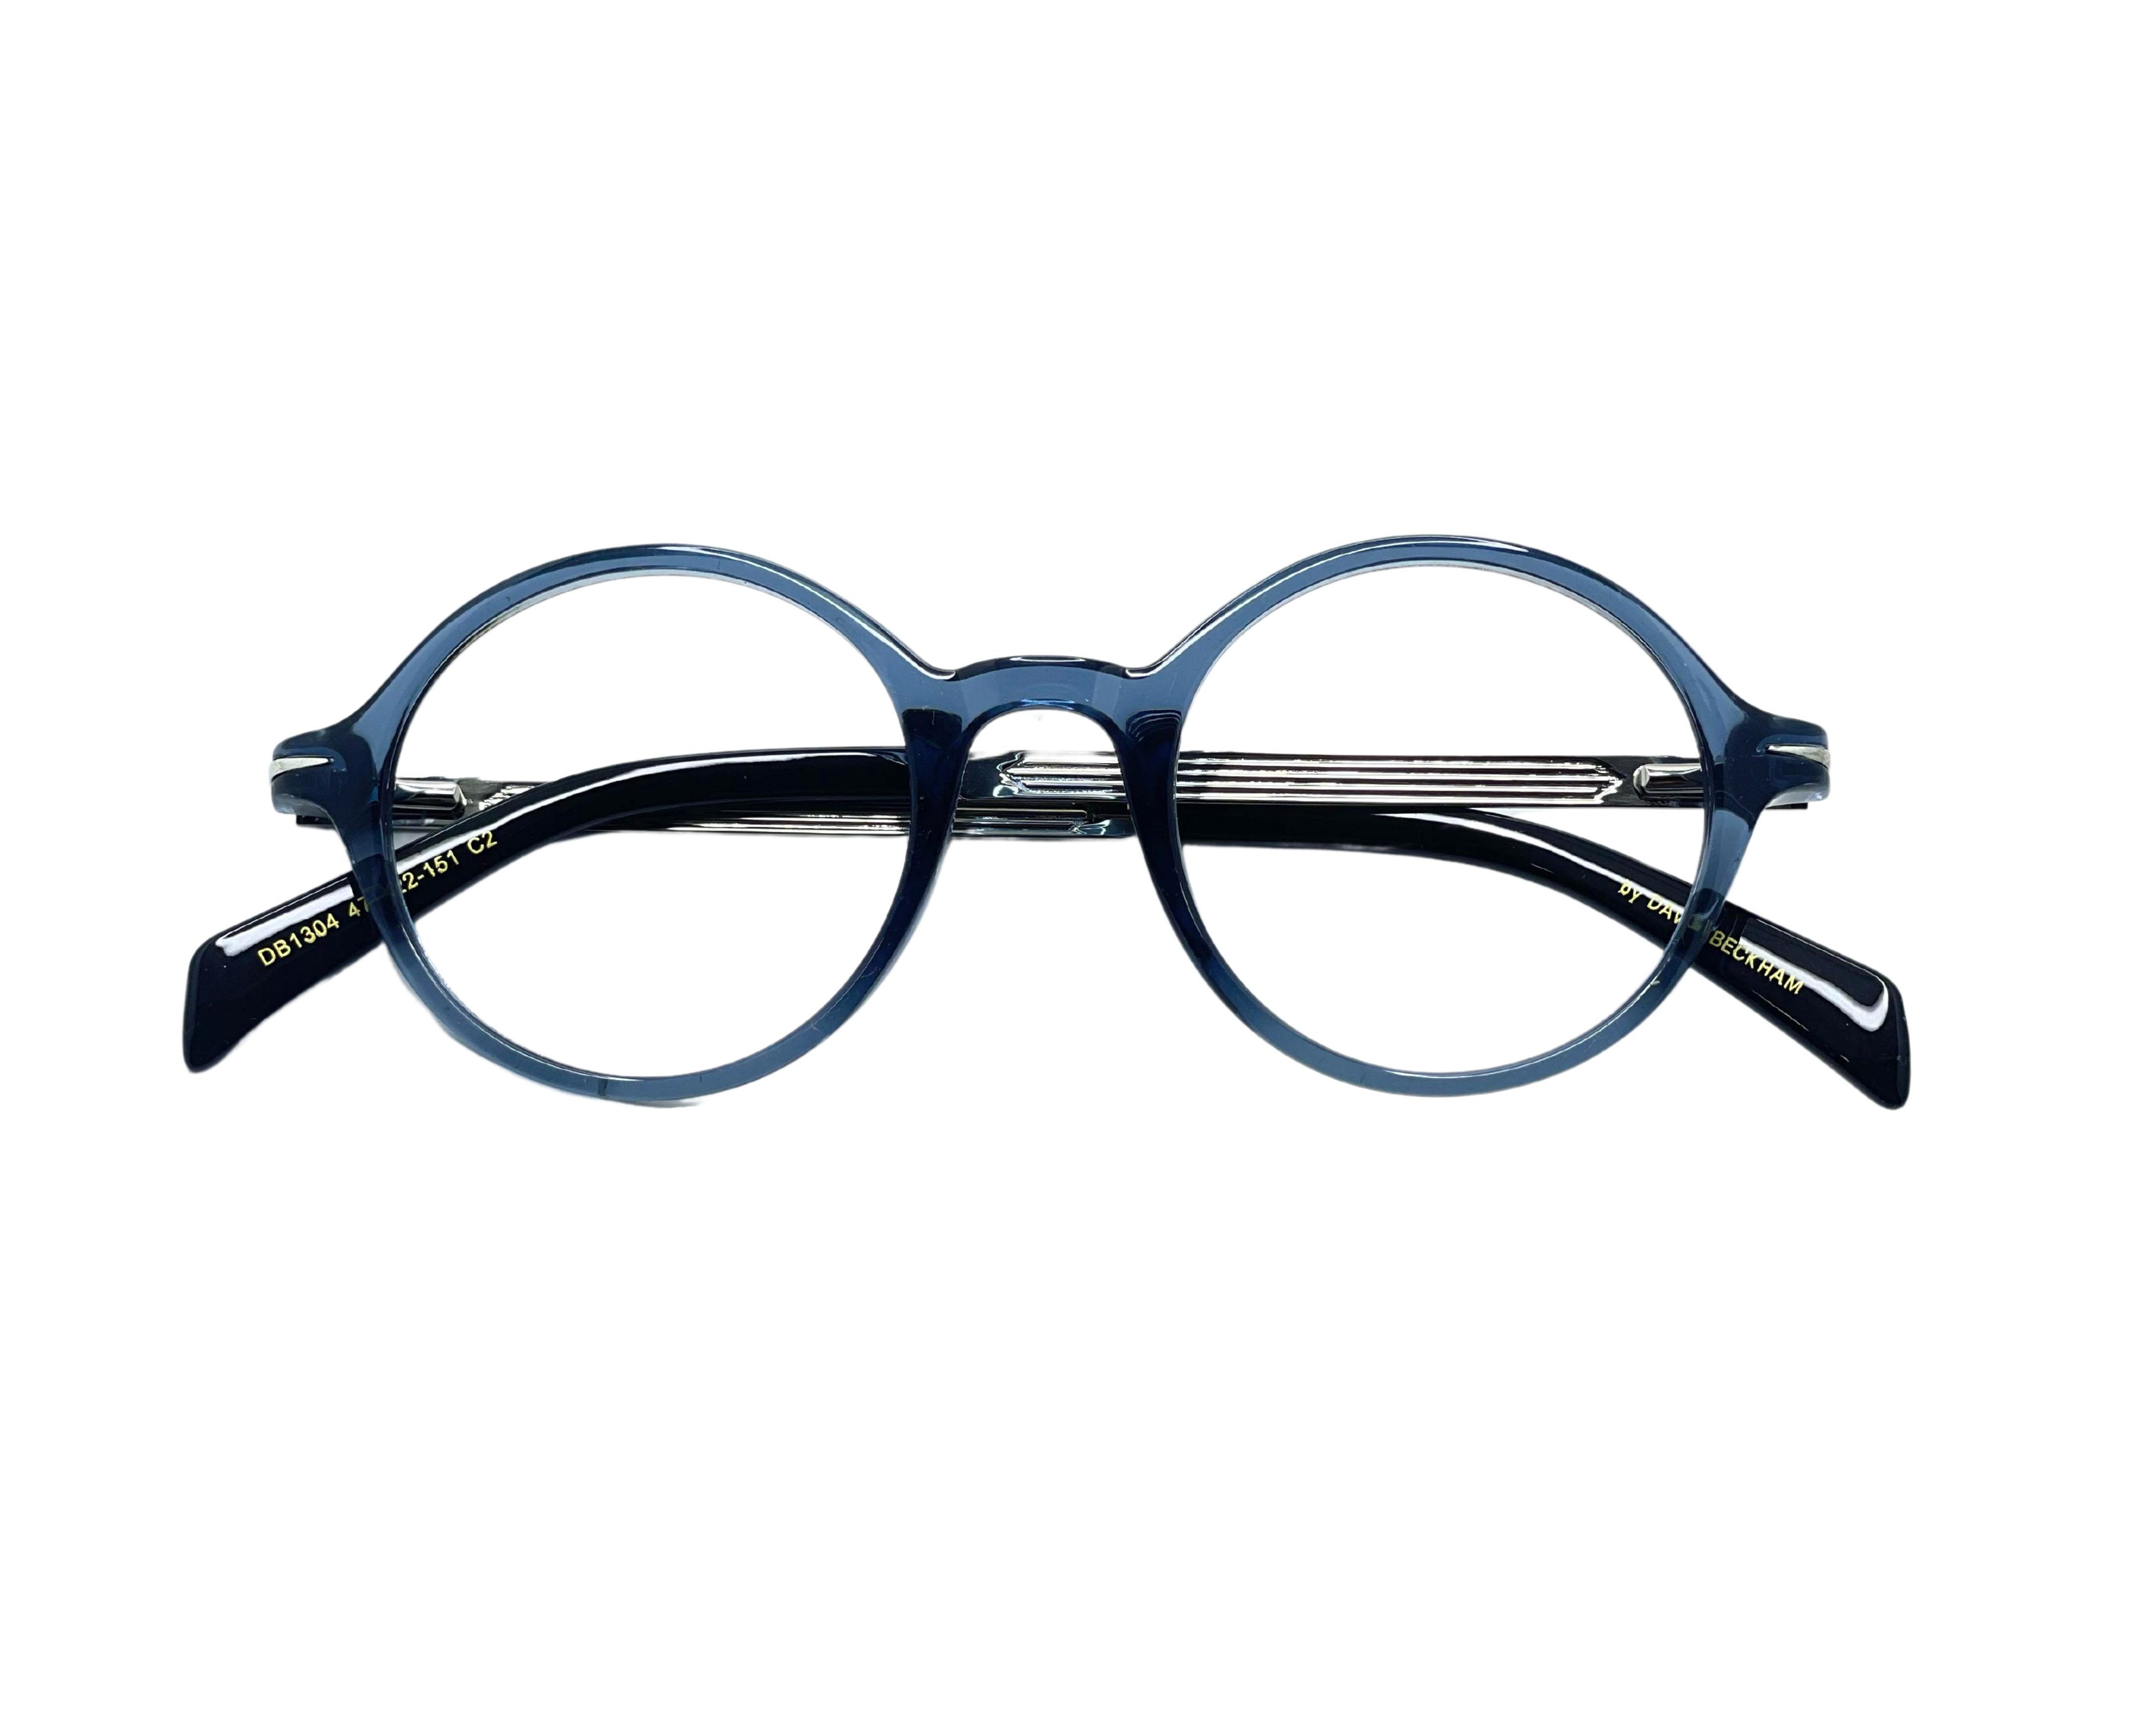 NS Deluxe - 1304 - Blue - Eyeglasses